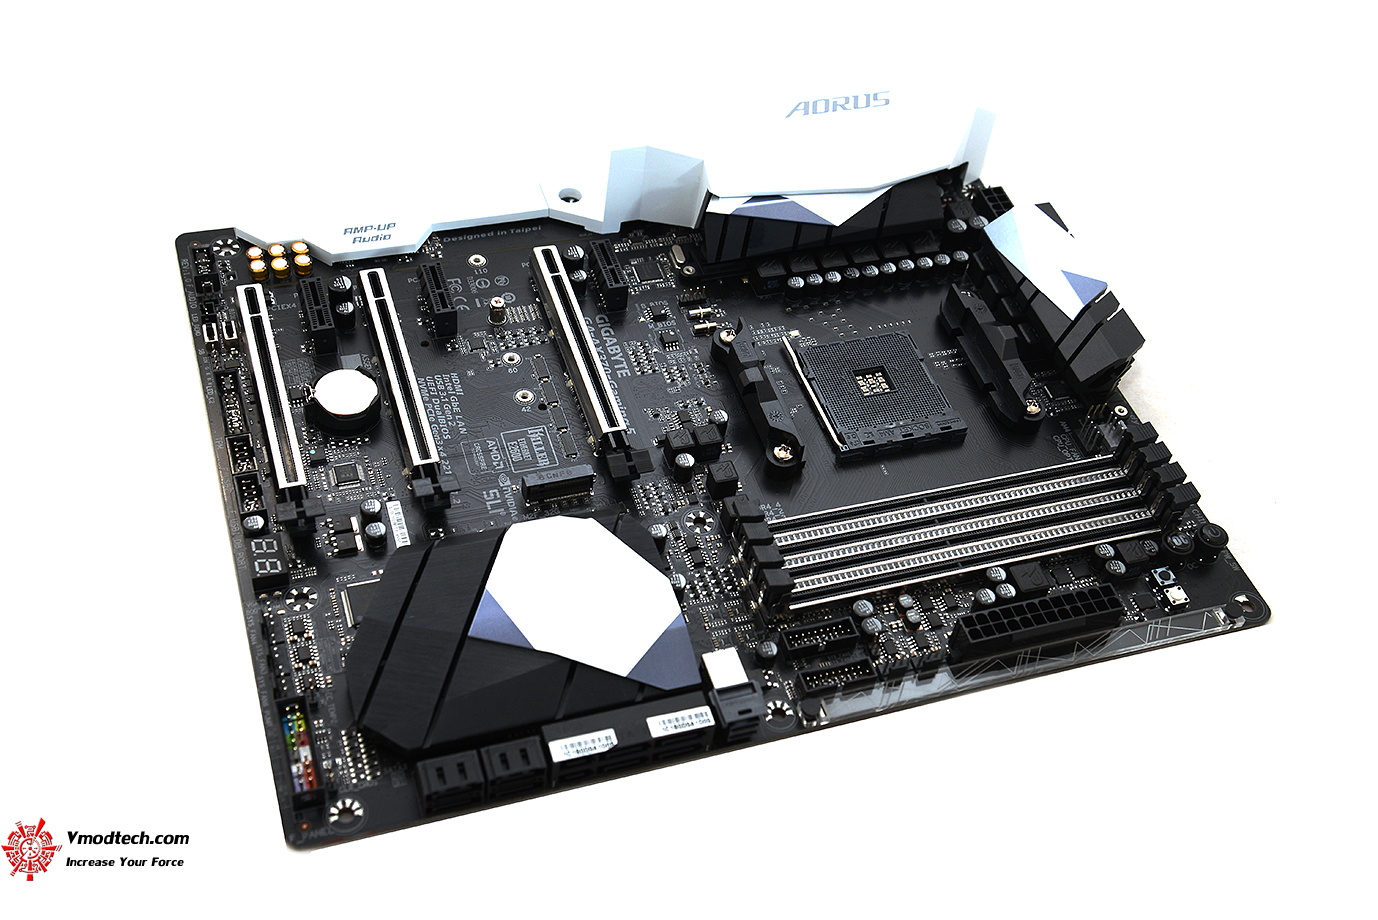 dsc 5508 AMD RYZEN5 2400G WITH GIGABYTE AX370 GAMING 5 REVIEW 